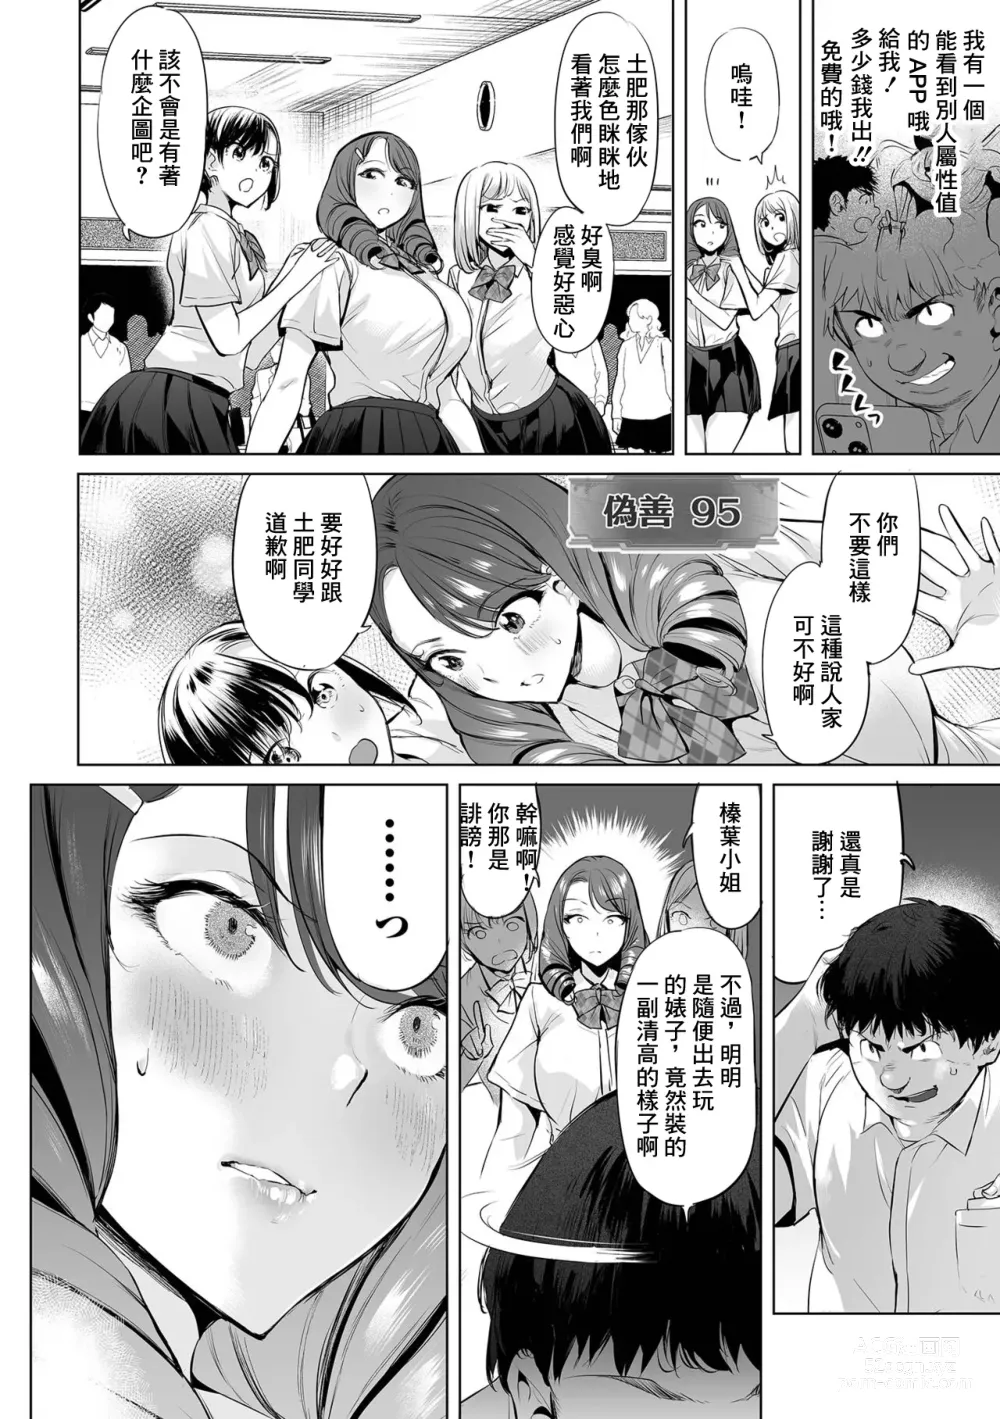 Page 2 of manga Ijire! Ero Status